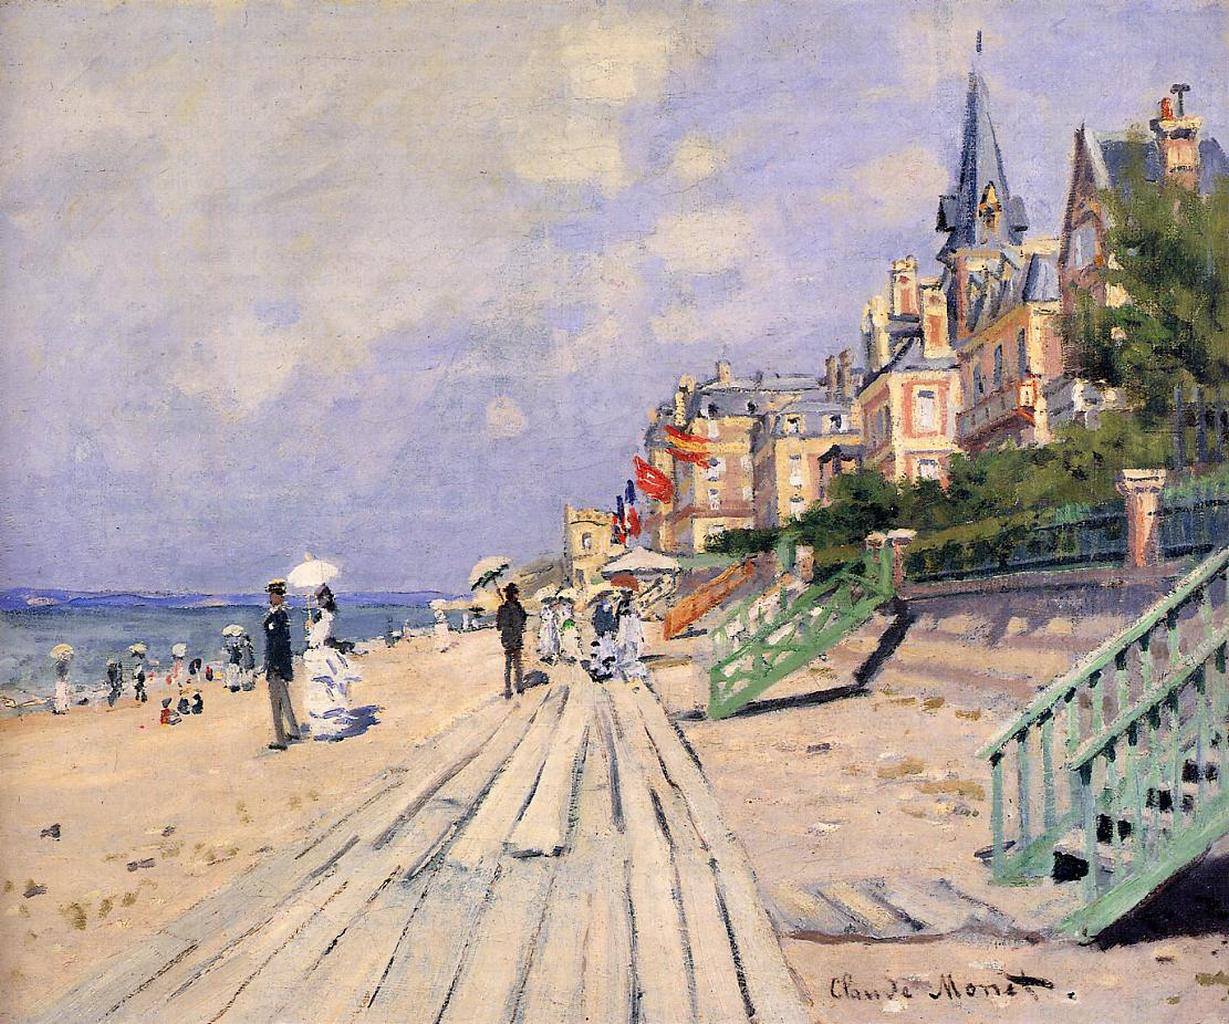 Claude+Monet-1840-1926 (734).jpg